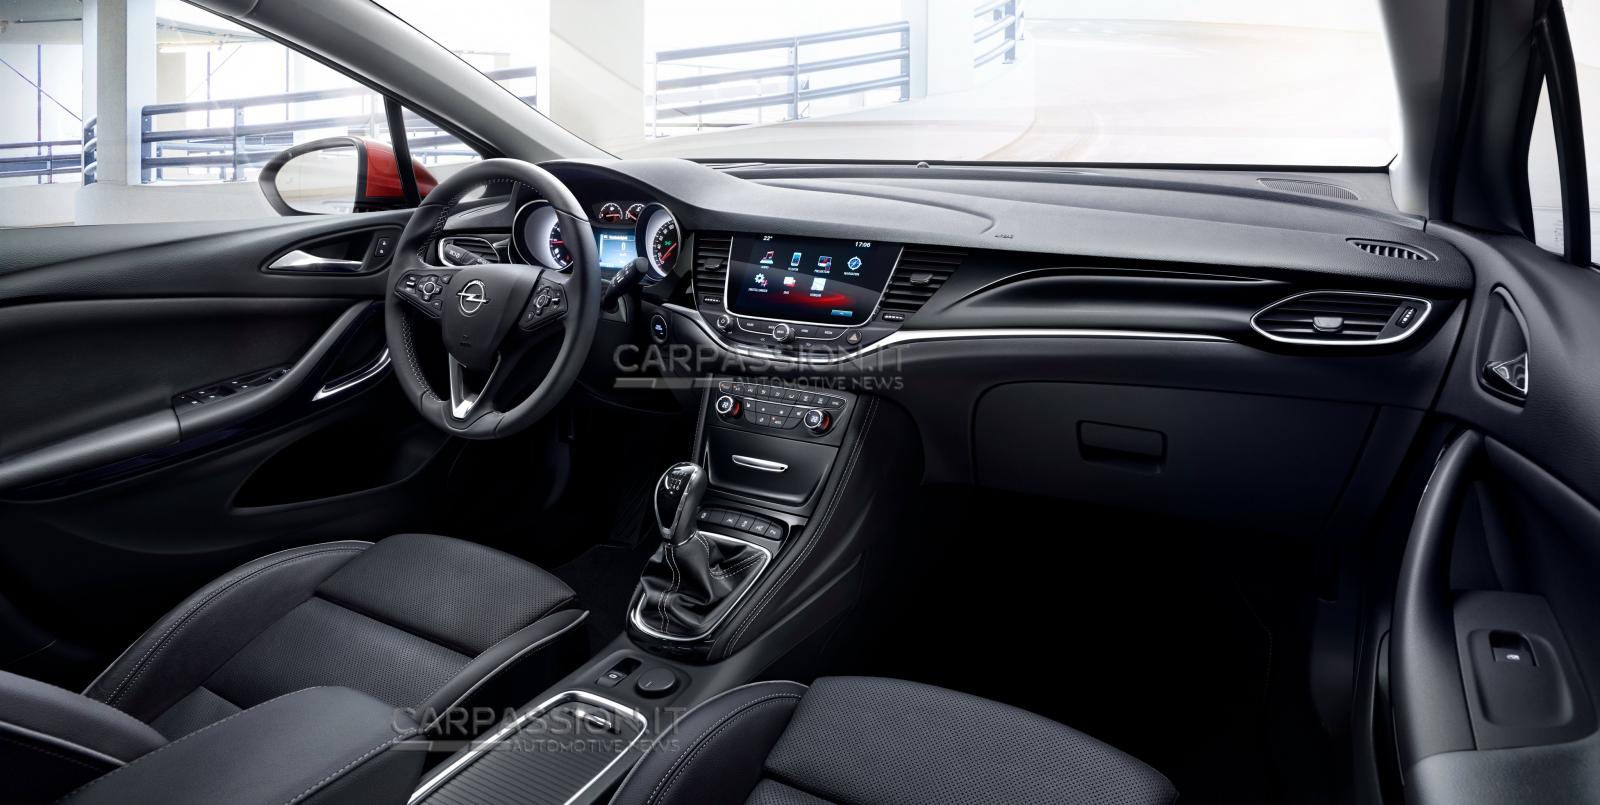 2016 Opel Astra leaked ahead of Frankfurt Motor Show